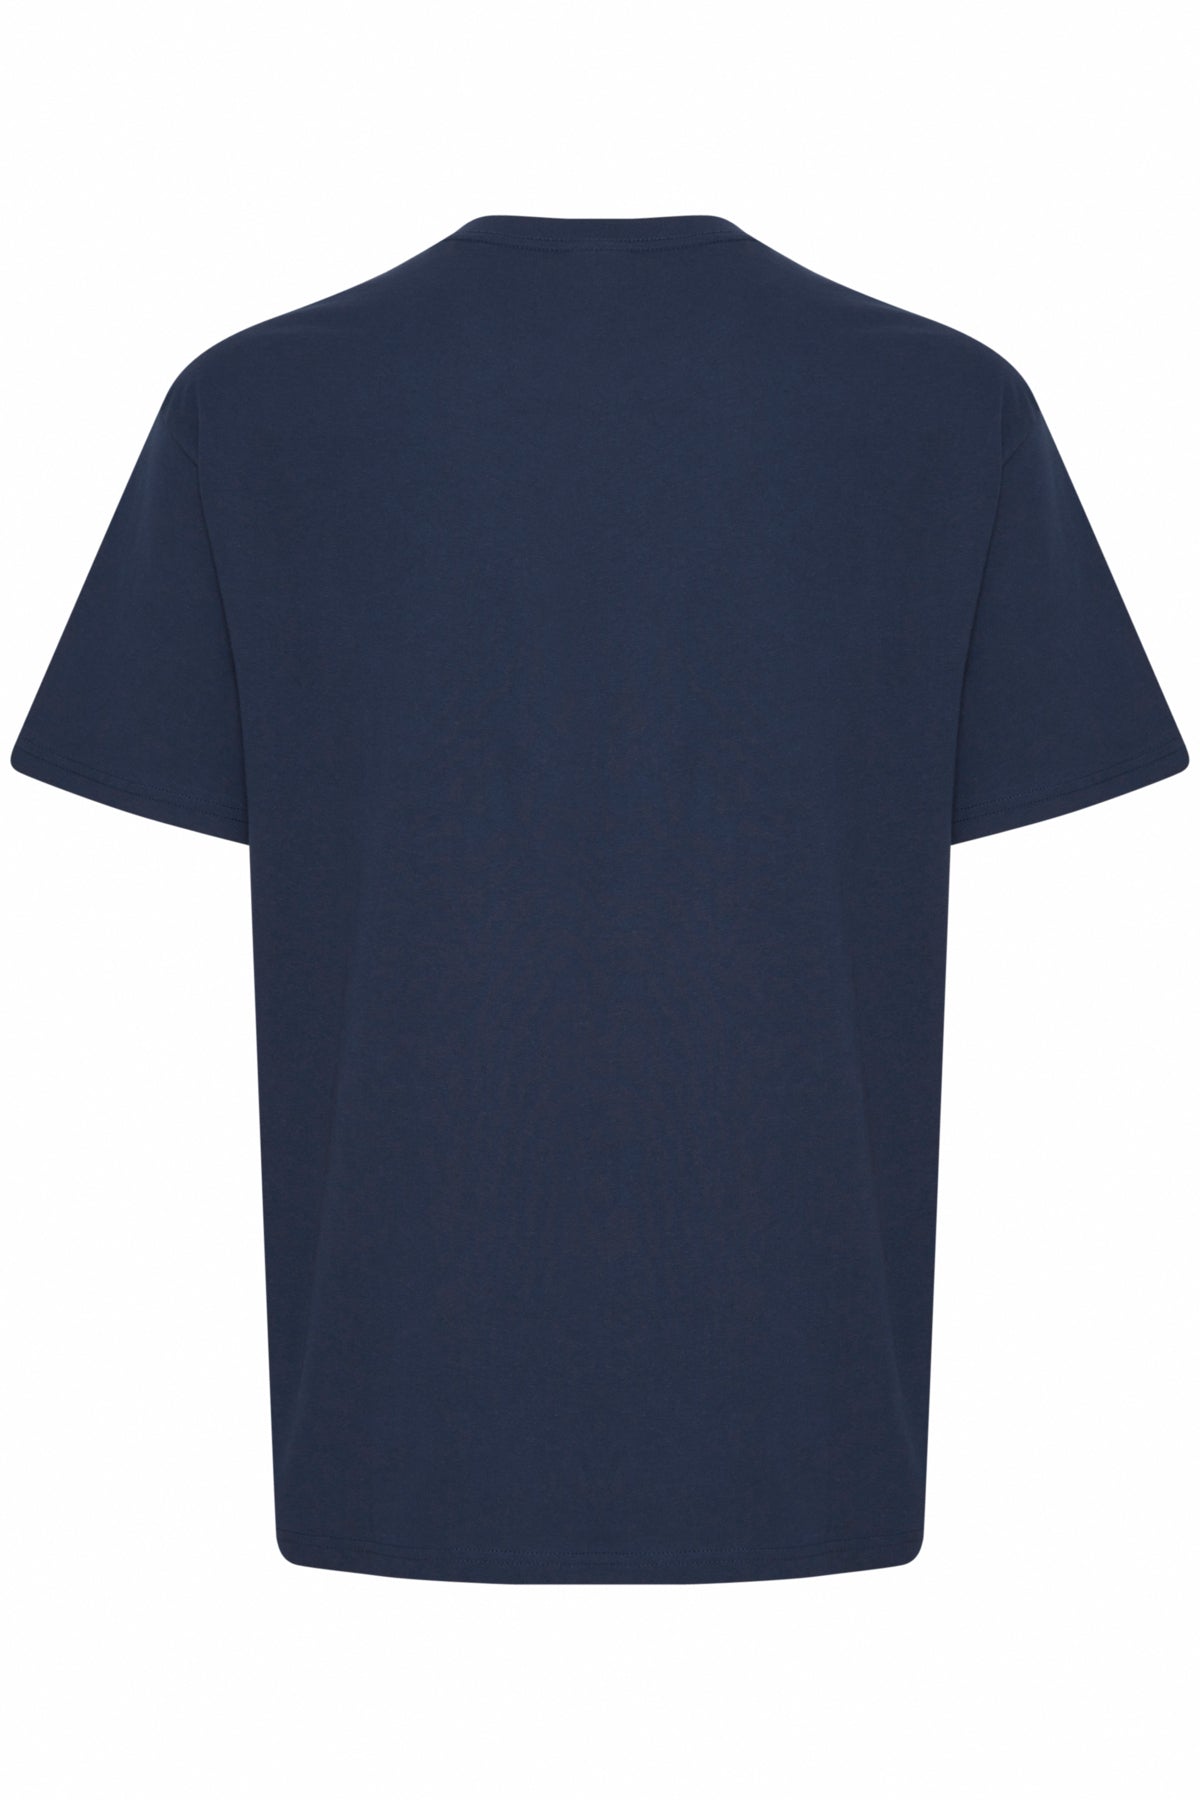 !Solid Ilias Insignia Blue T-shirt